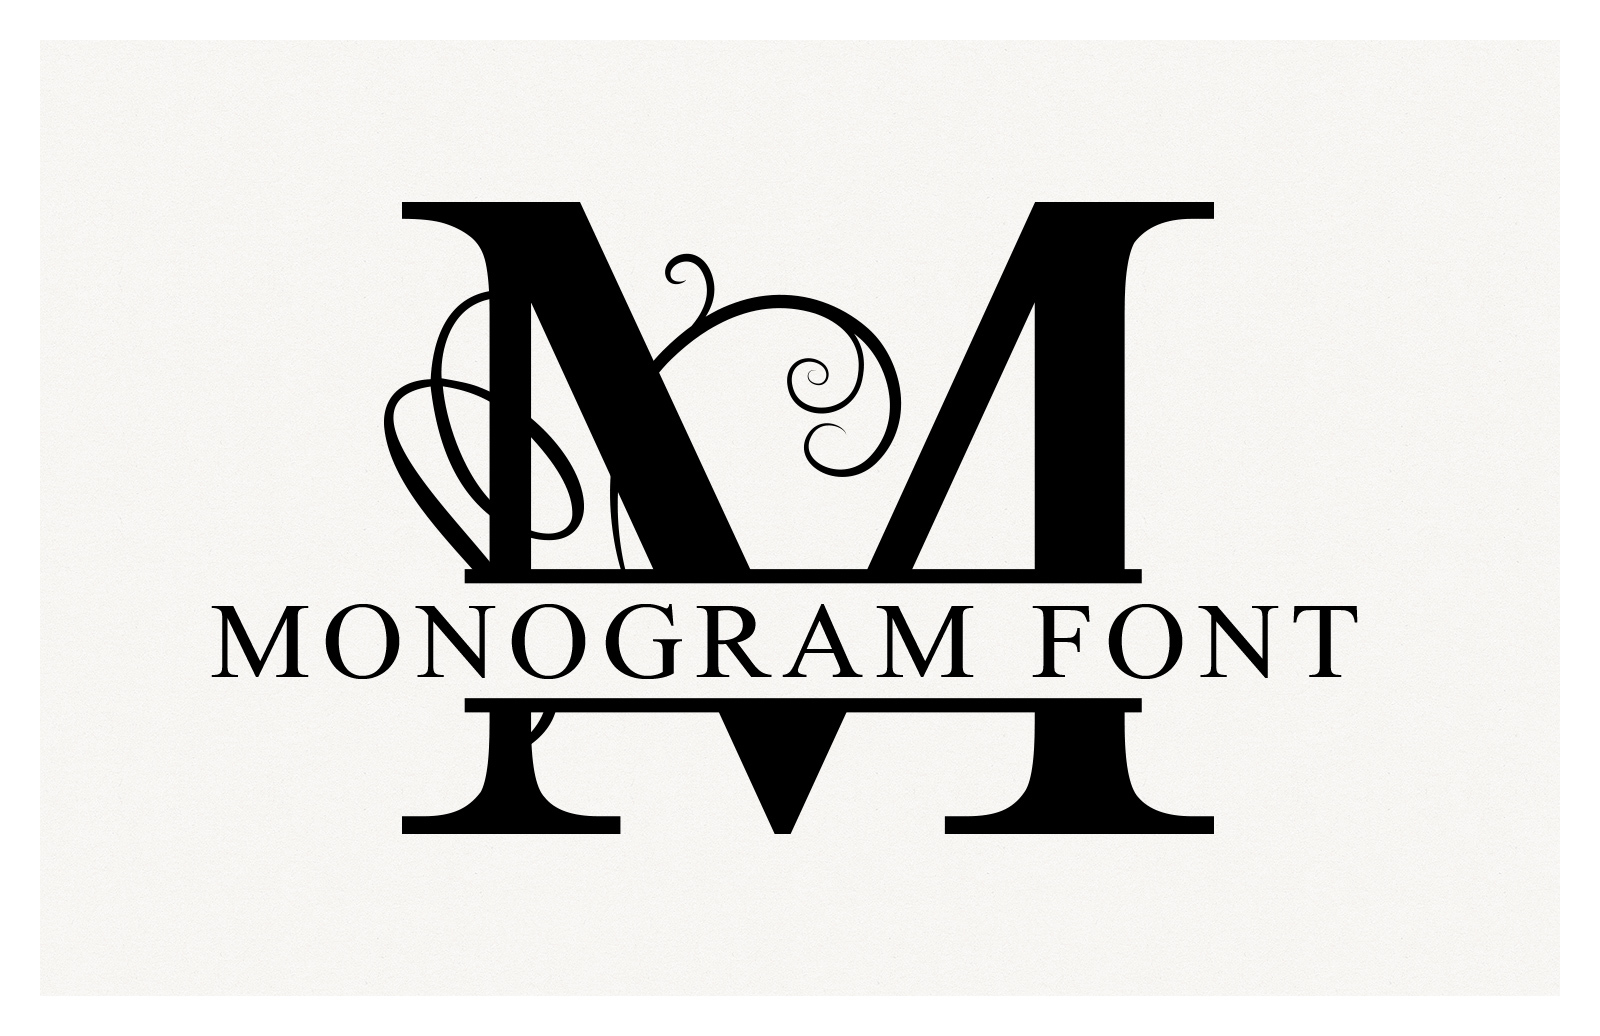 split-monogram-font-vectors-medialoot